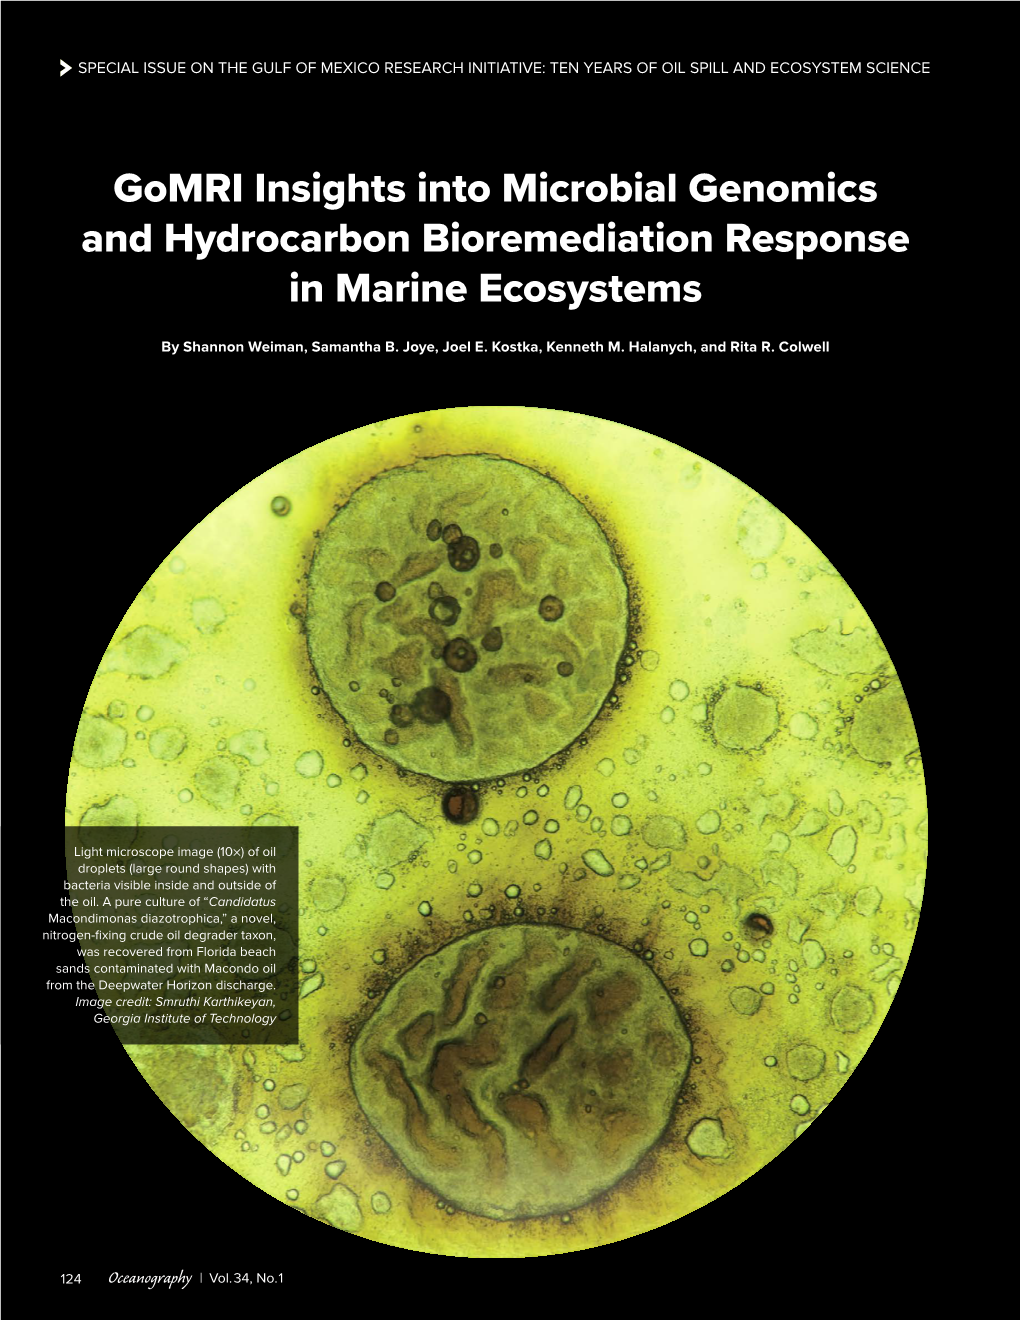 Gomri Insights Into Microbial Genomics and Hydrocarbon Bioremediation Response in Marine Ecosystems